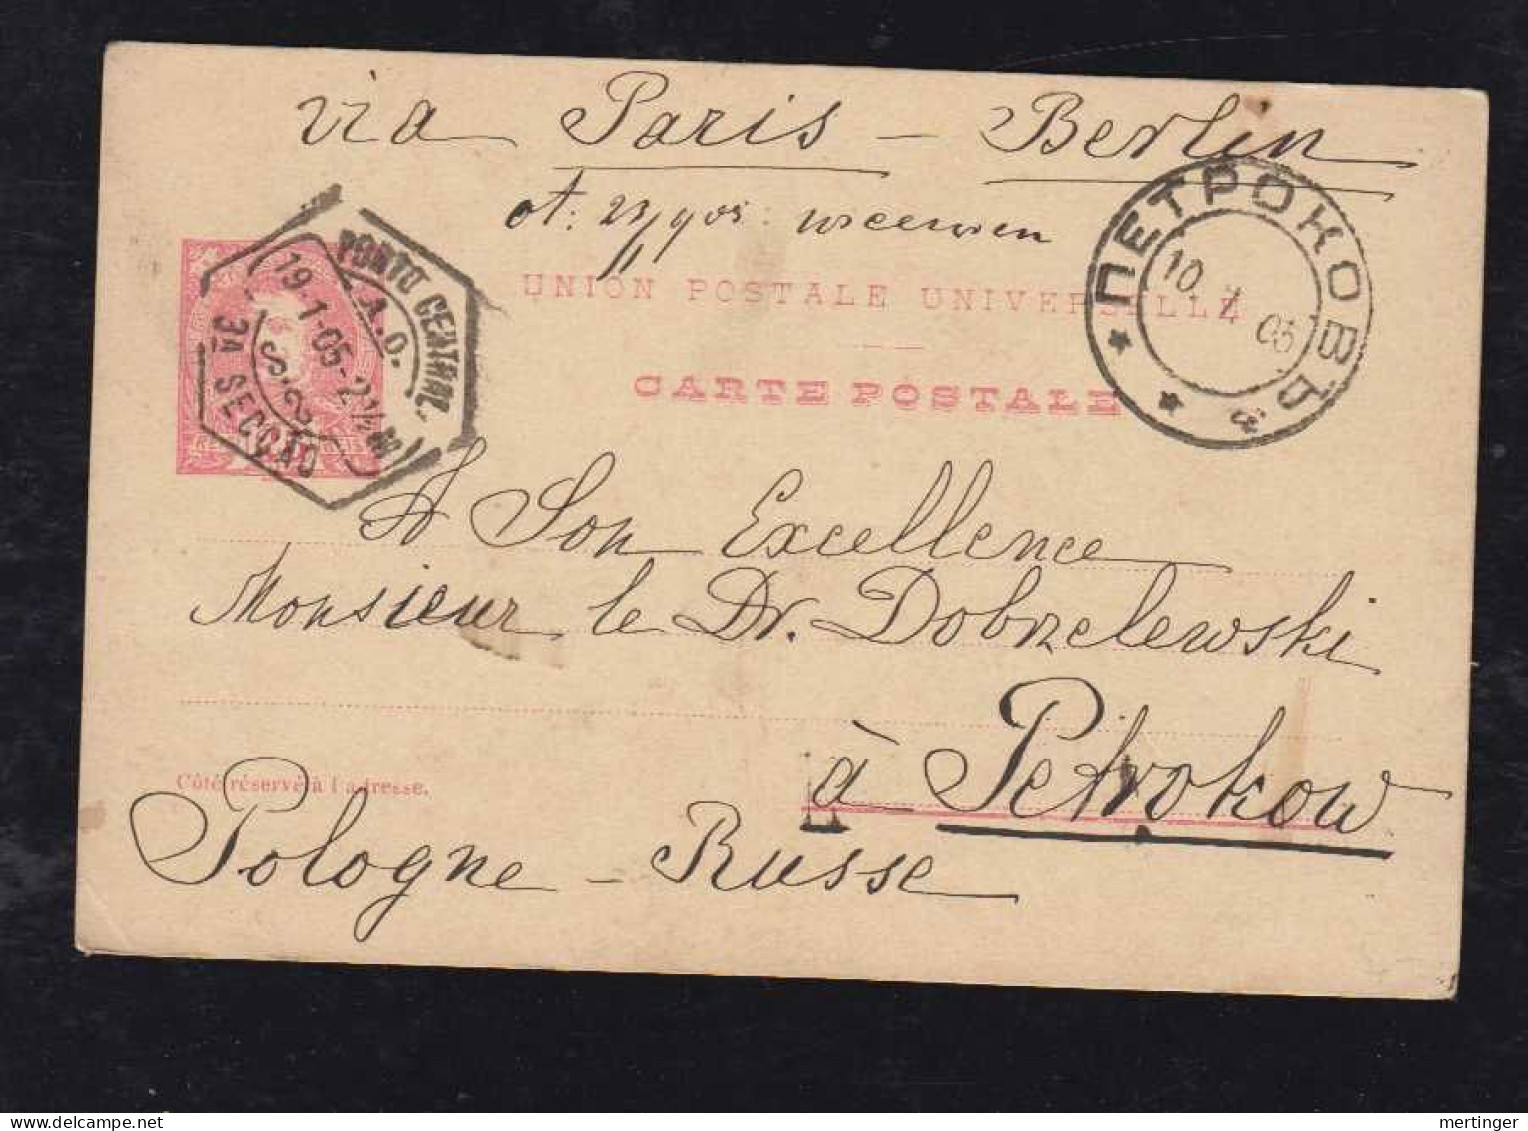 Portugal 1905 Stationery Card 25R Carlos LISBOA To PETRIKOW PIOTRKOW PETRIKAU Poland Russia - Covers & Documents